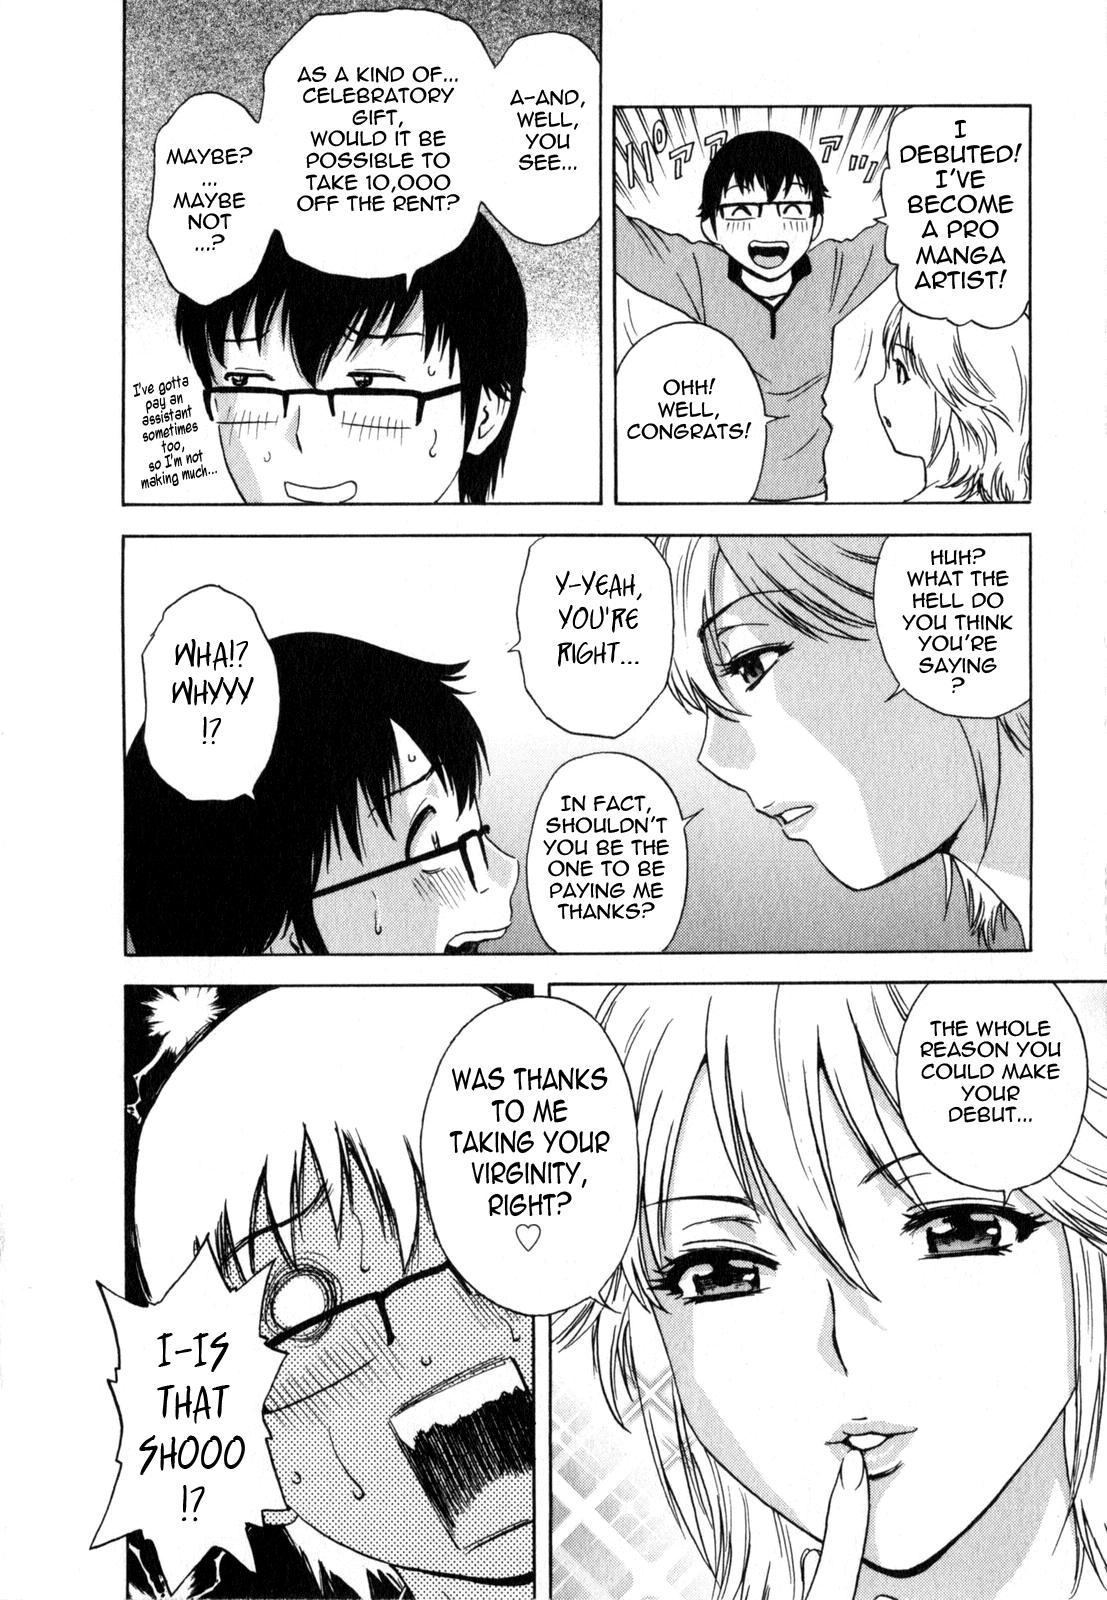 [Hidemaru] Life with Married Women Just Like a Manga 2 - Ch. 1-4 [English] {Tadanohito} 59